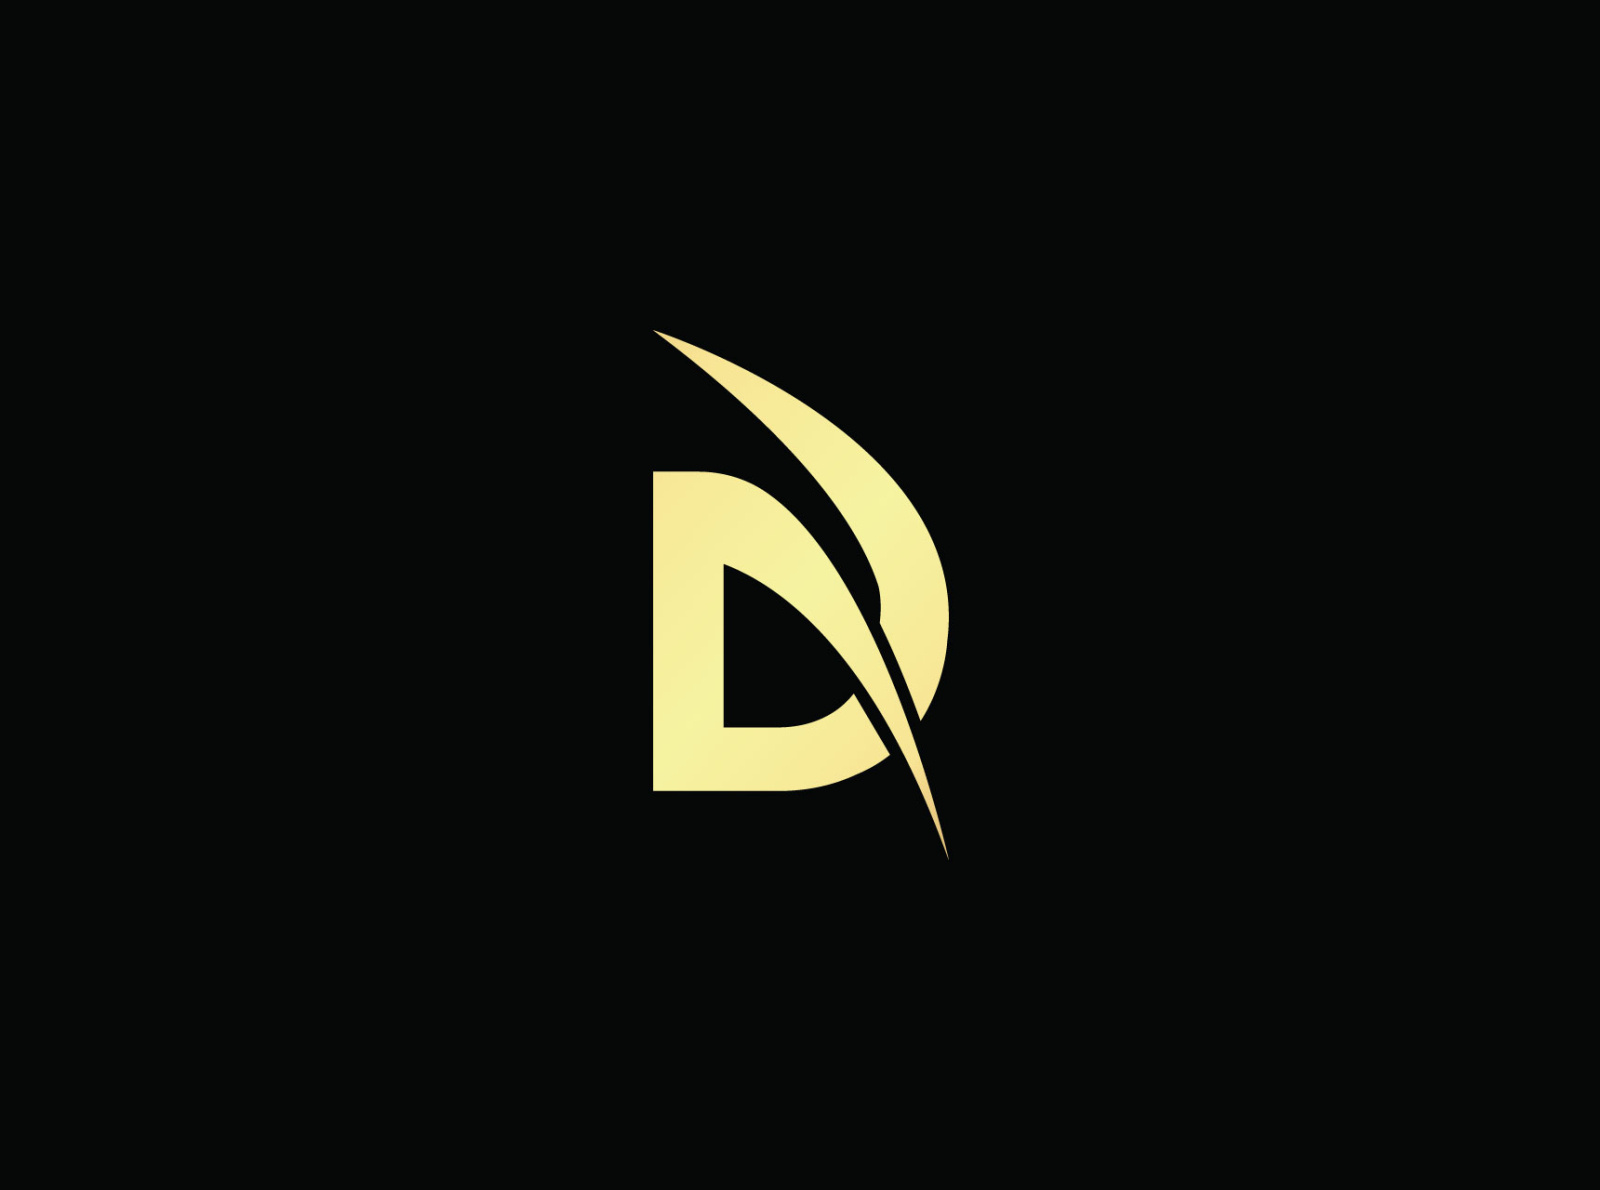 Letter D logo design by Mahamud hasan Tamim on Dribbble